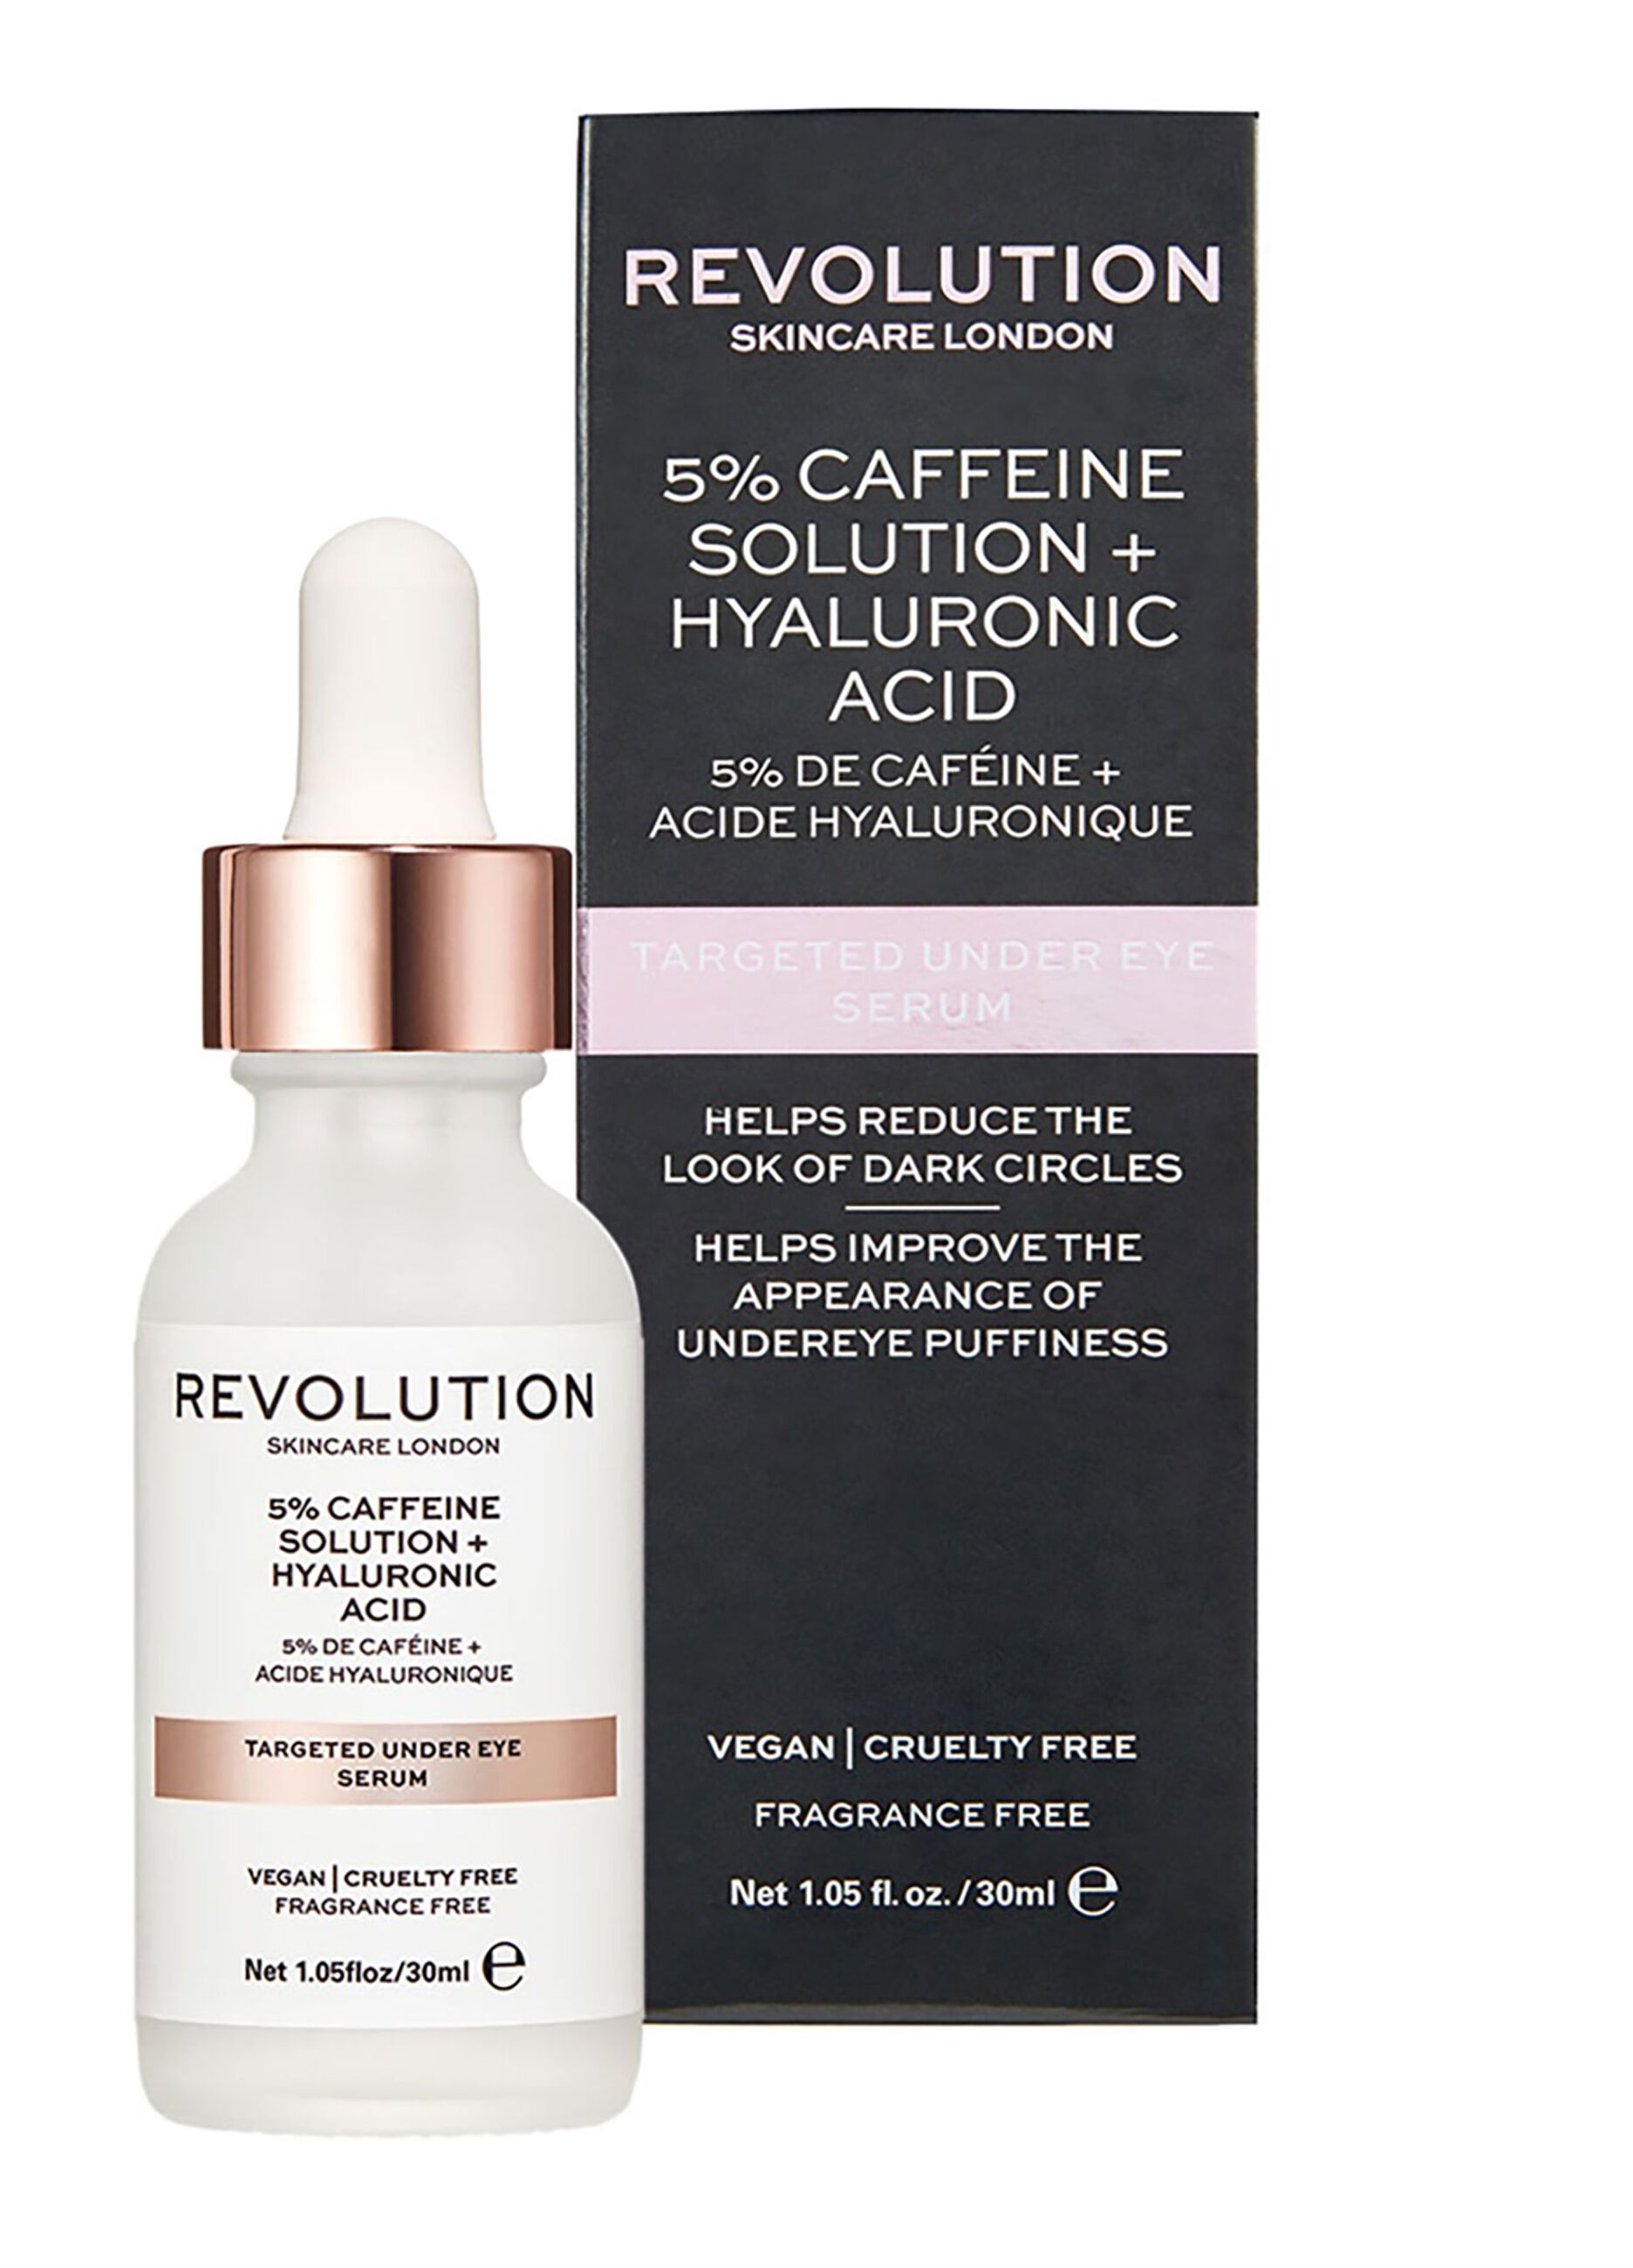 Eye serum with 5% Caffeine and Hyaluronic Acid